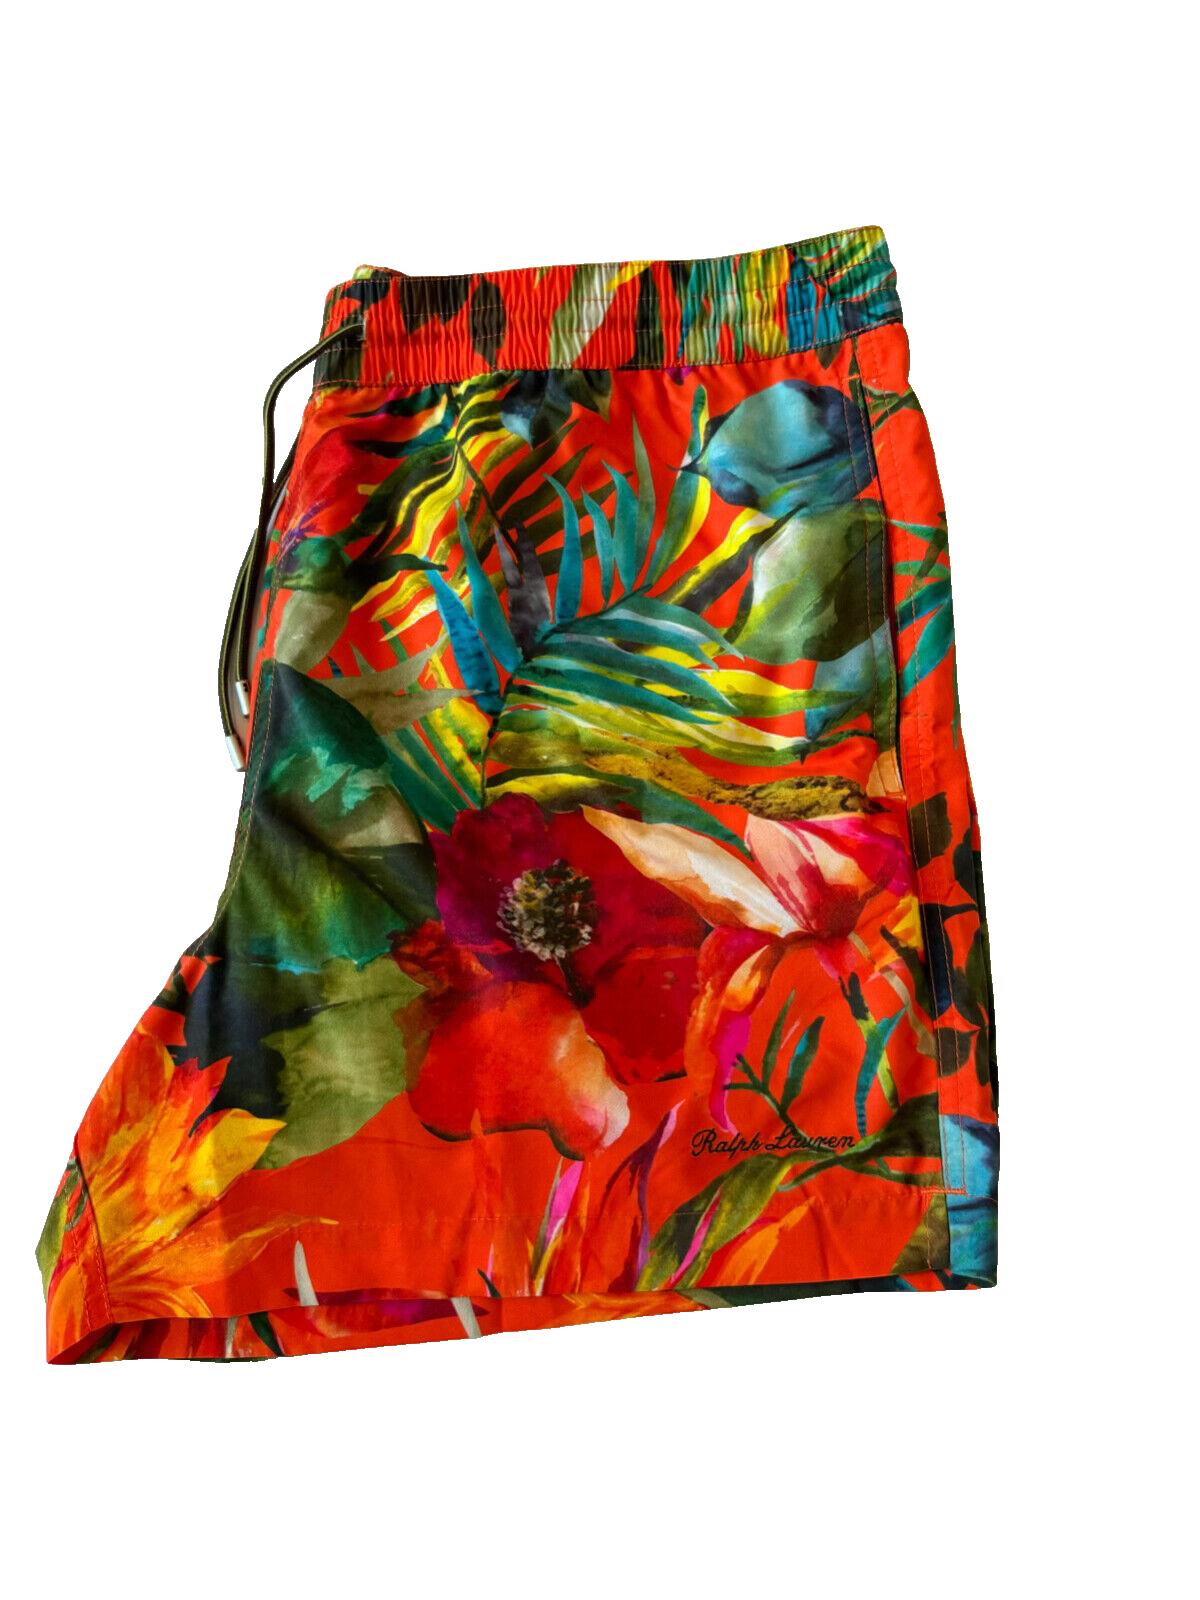 NWT $395 Polo Ralph Lauren Purple Label Men's Tropical Swim Shorts XL Portugal